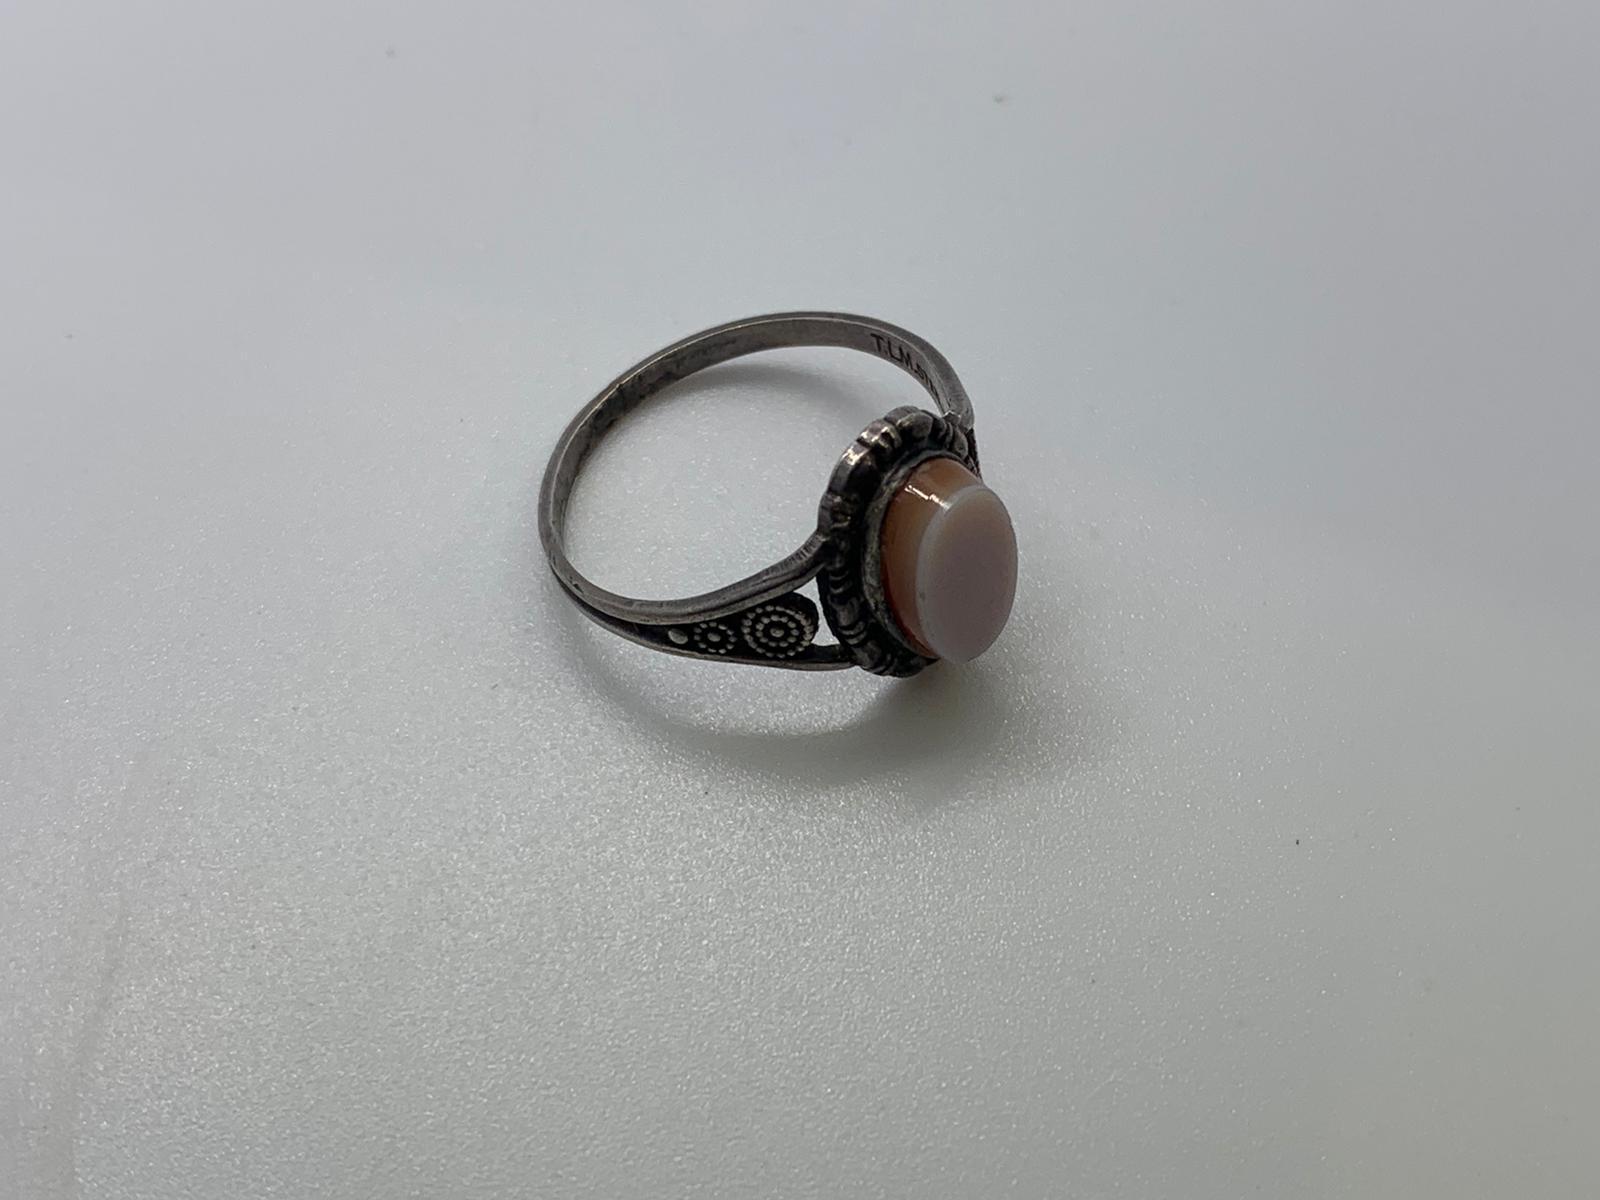 Silver cornelian ring - Image 2 of 2